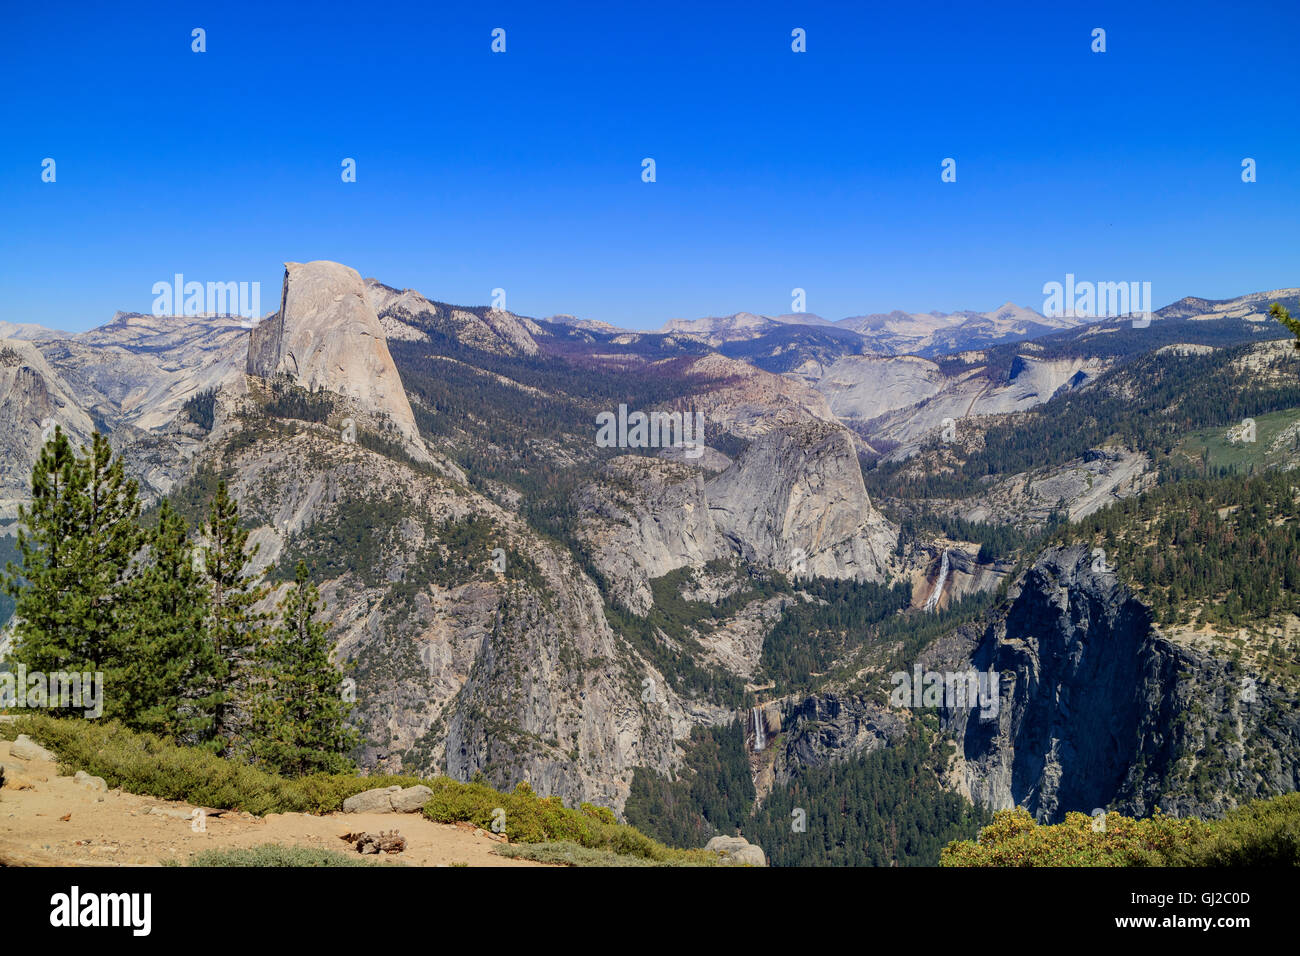 The beautiful landscape of Washburn Point in Yosemite National Park Stock Photo